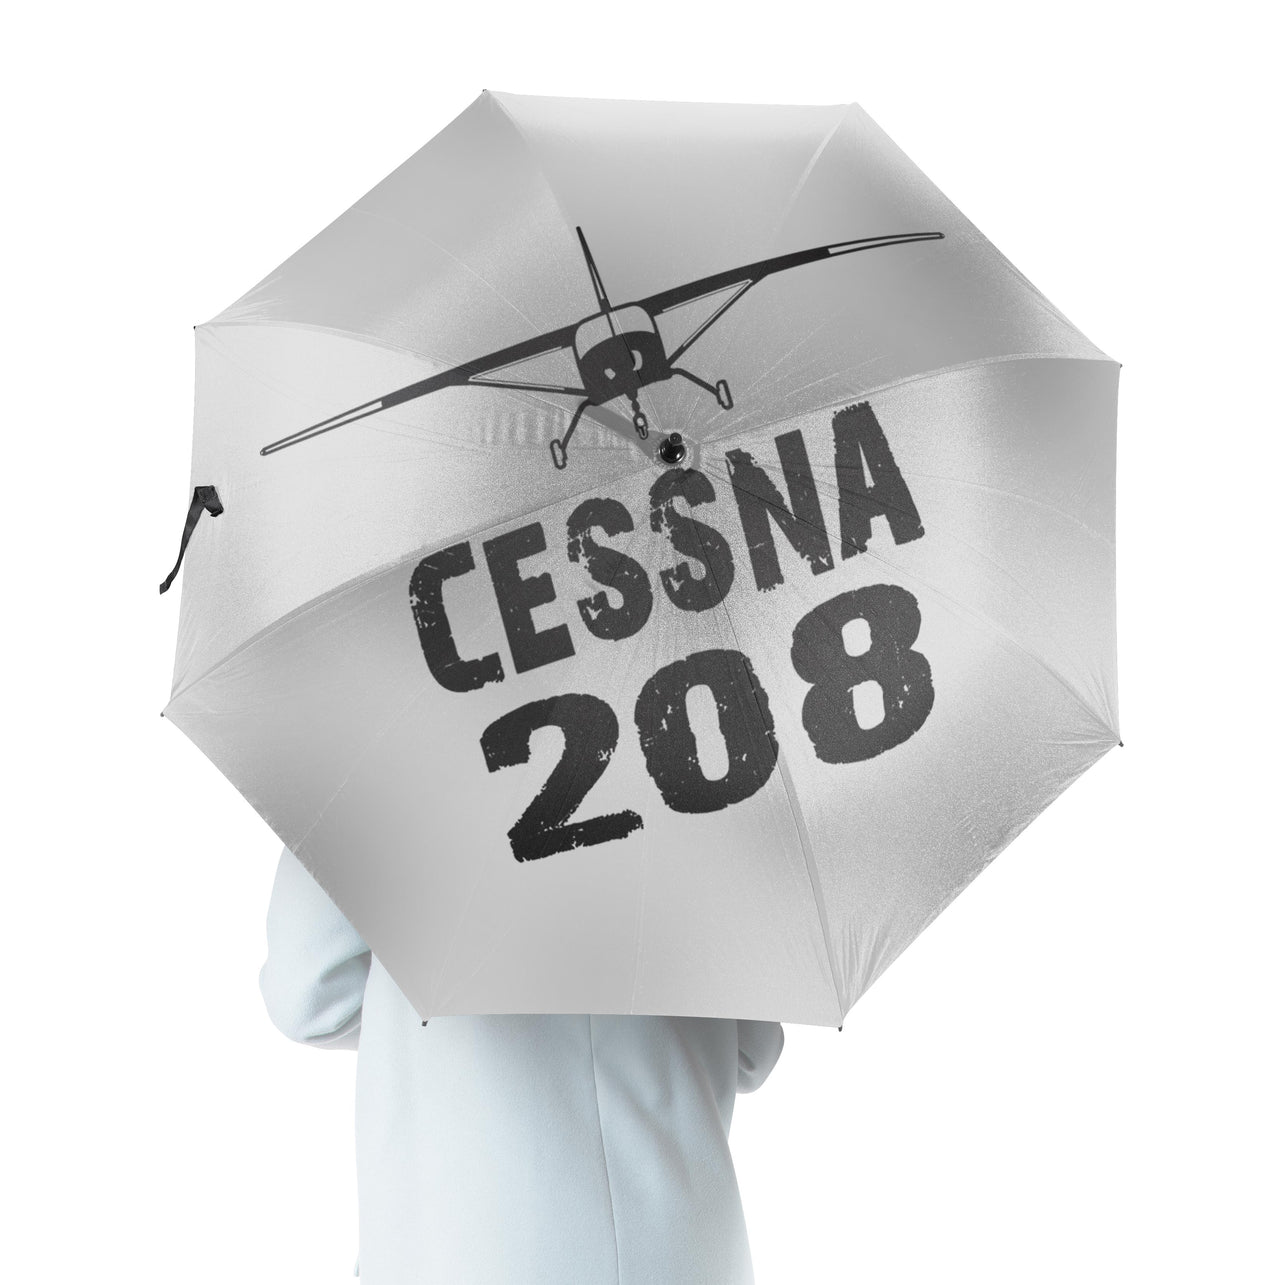 Cessna 208 & Plane Designed Umbrella